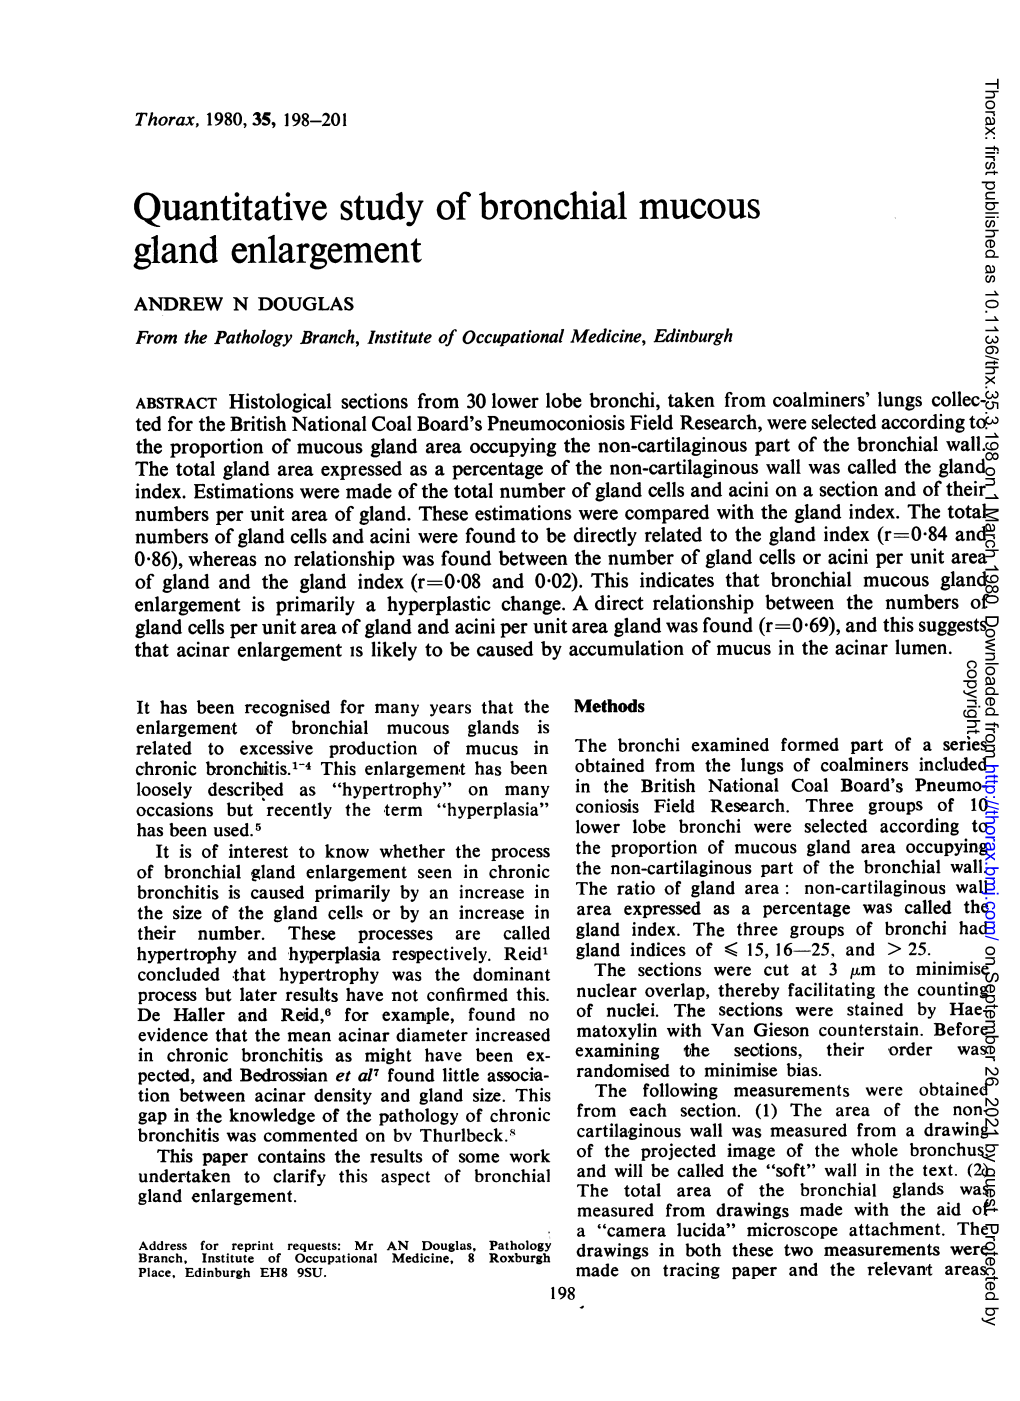 Quantitative Study of Bronchial Mucous Gland Enlargement ANDREW N DOUGLAS from the Pathology Branch, Institute of Occupational Medicine, Edinburgh